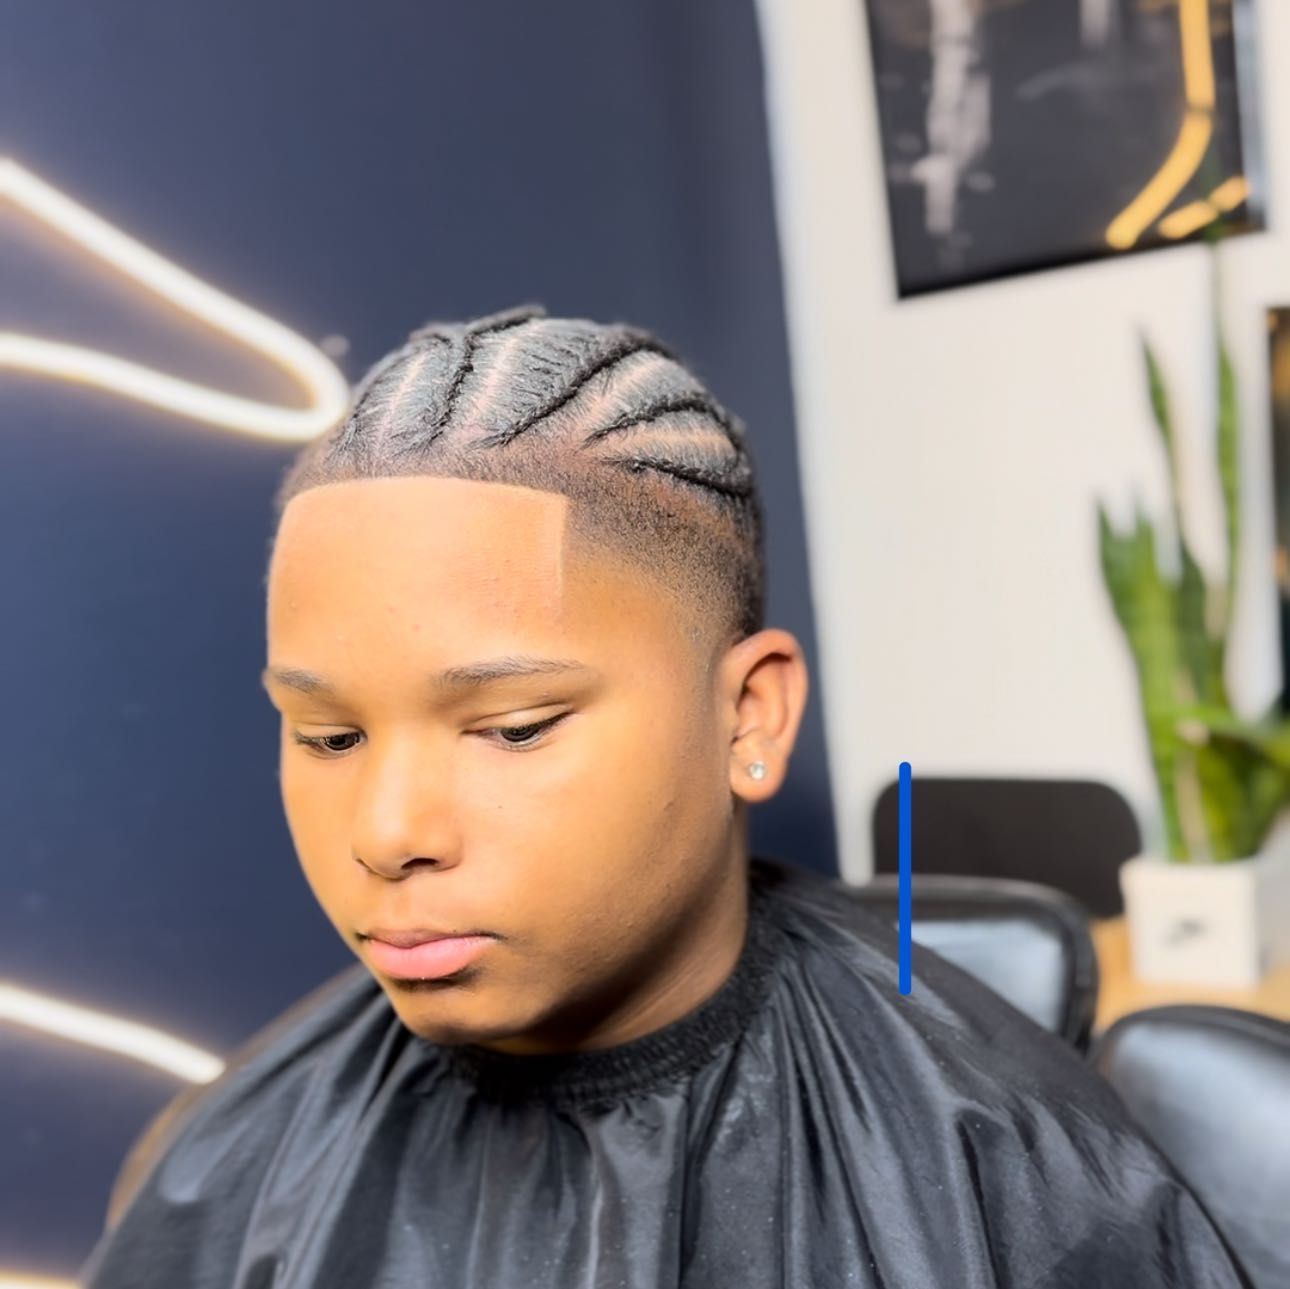 Kids Haircut DEPOSIT REQUIRED via ZELLE/APPLEPAY portfolio